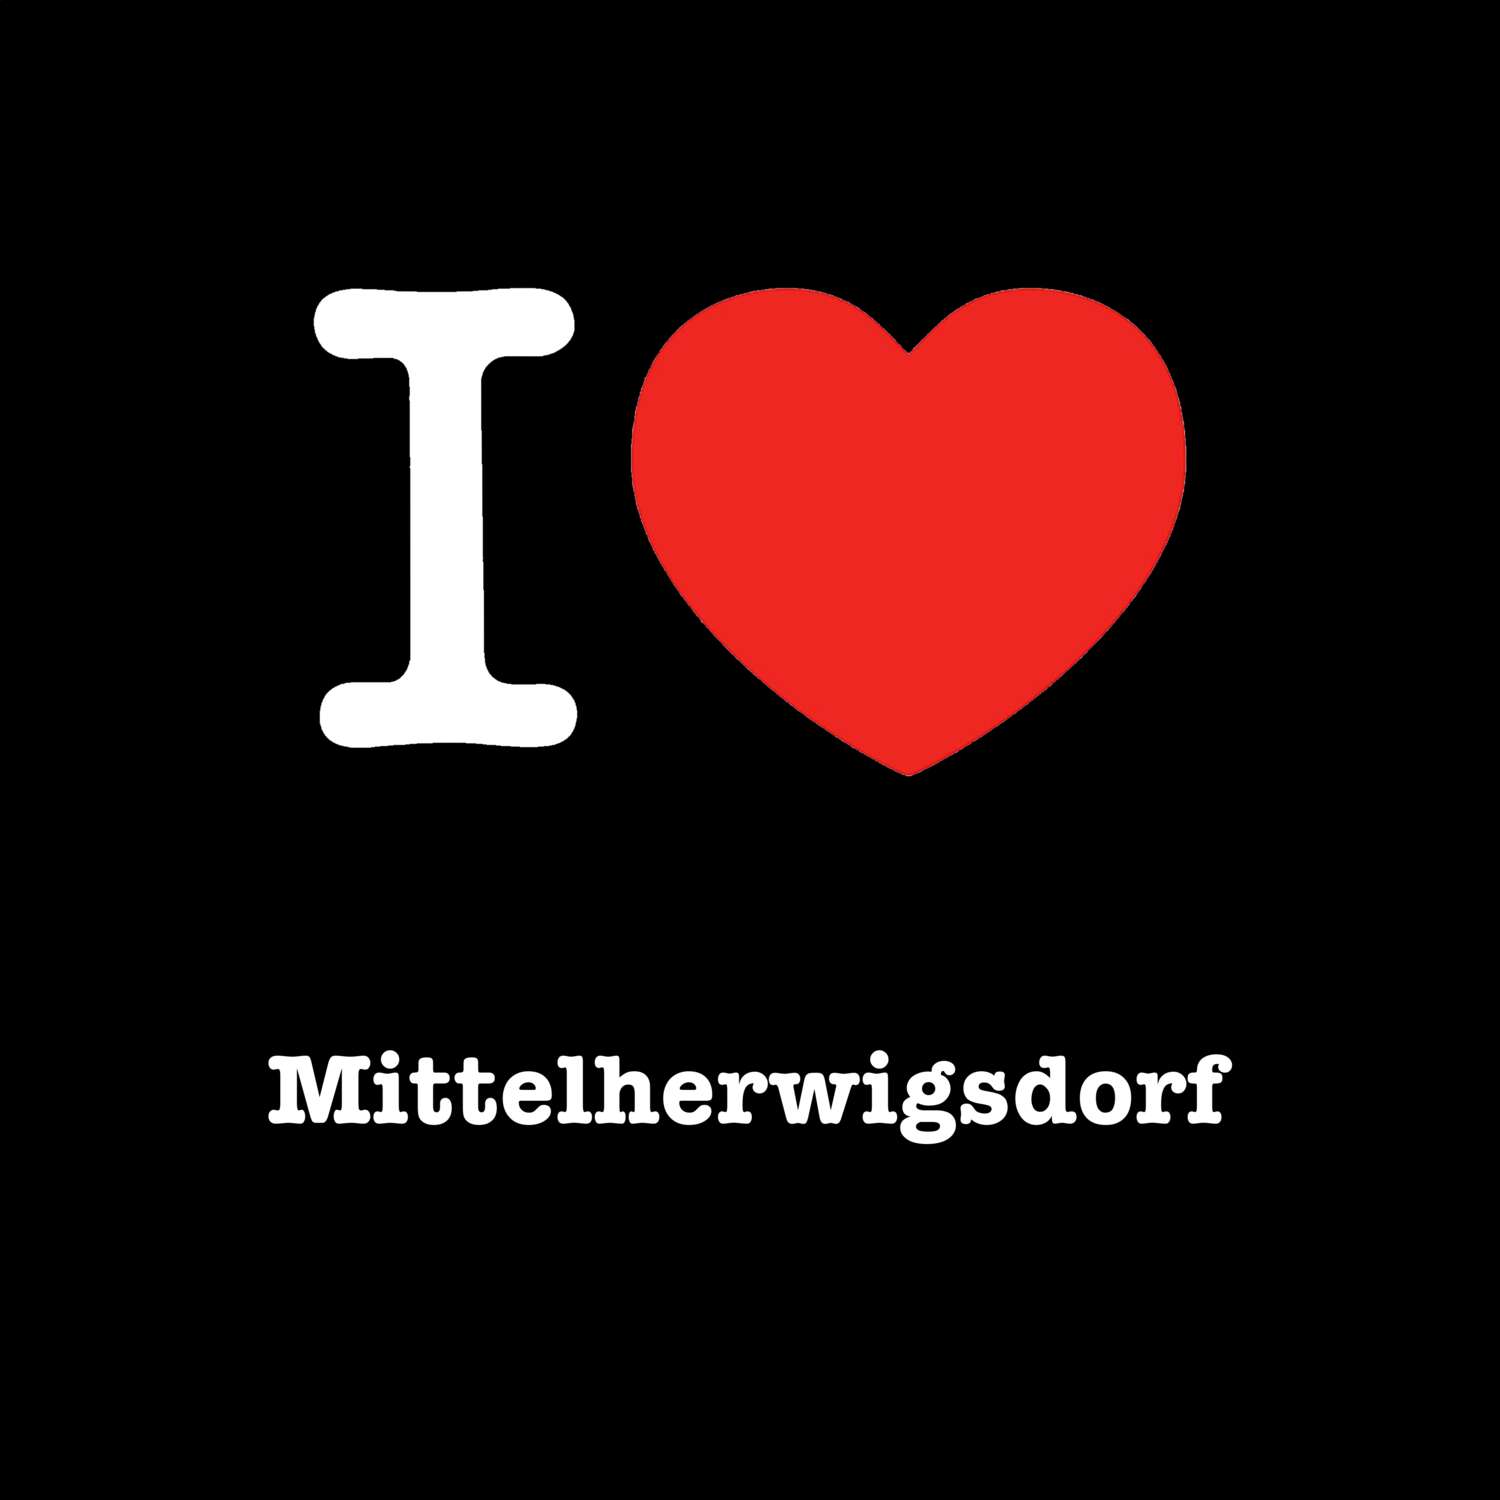 Mittelherwigsdorf T-Shirt »I love«